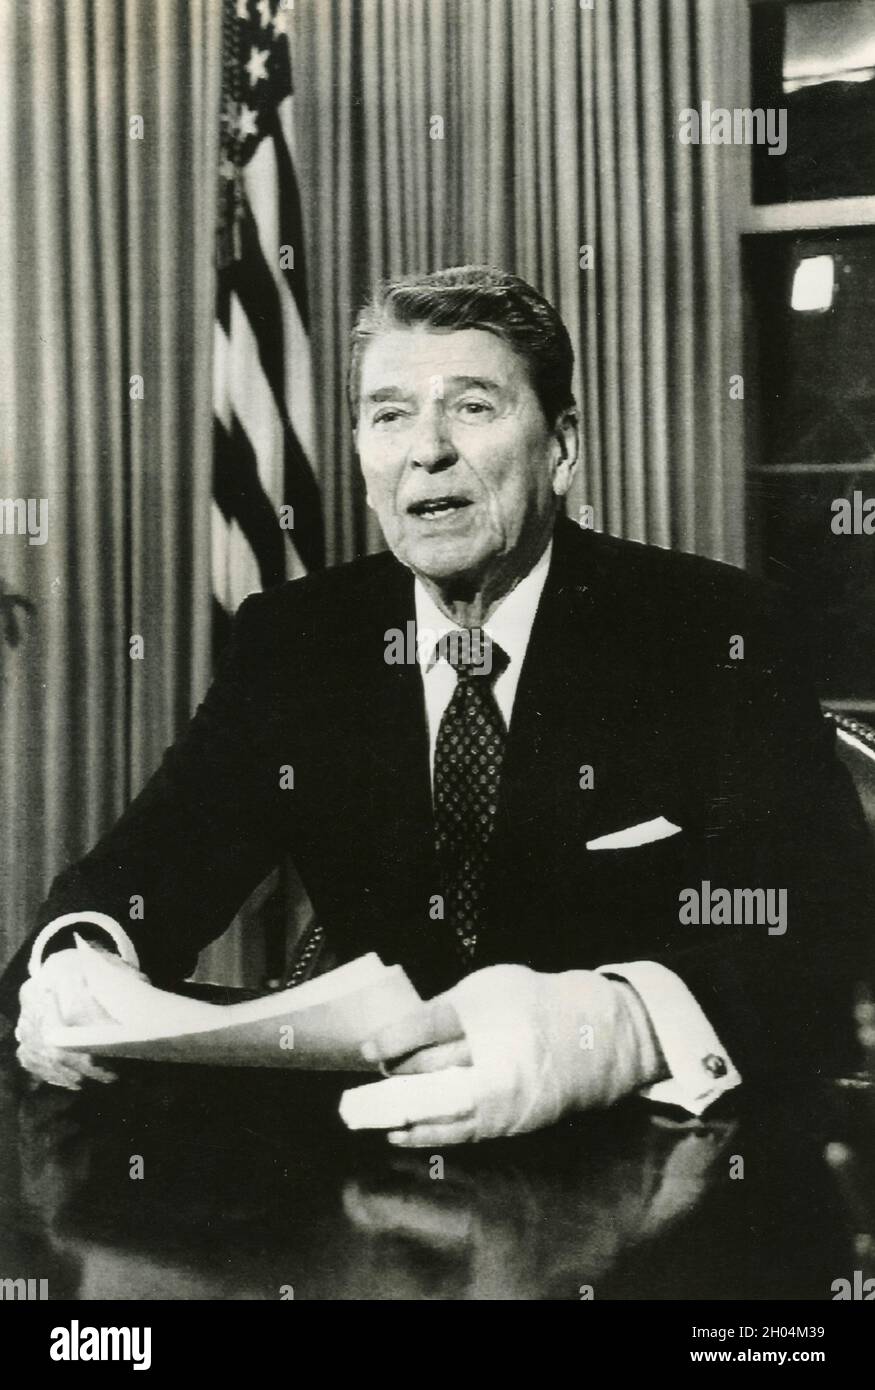 US President Ronald Reagan, 1980s Stock Photo